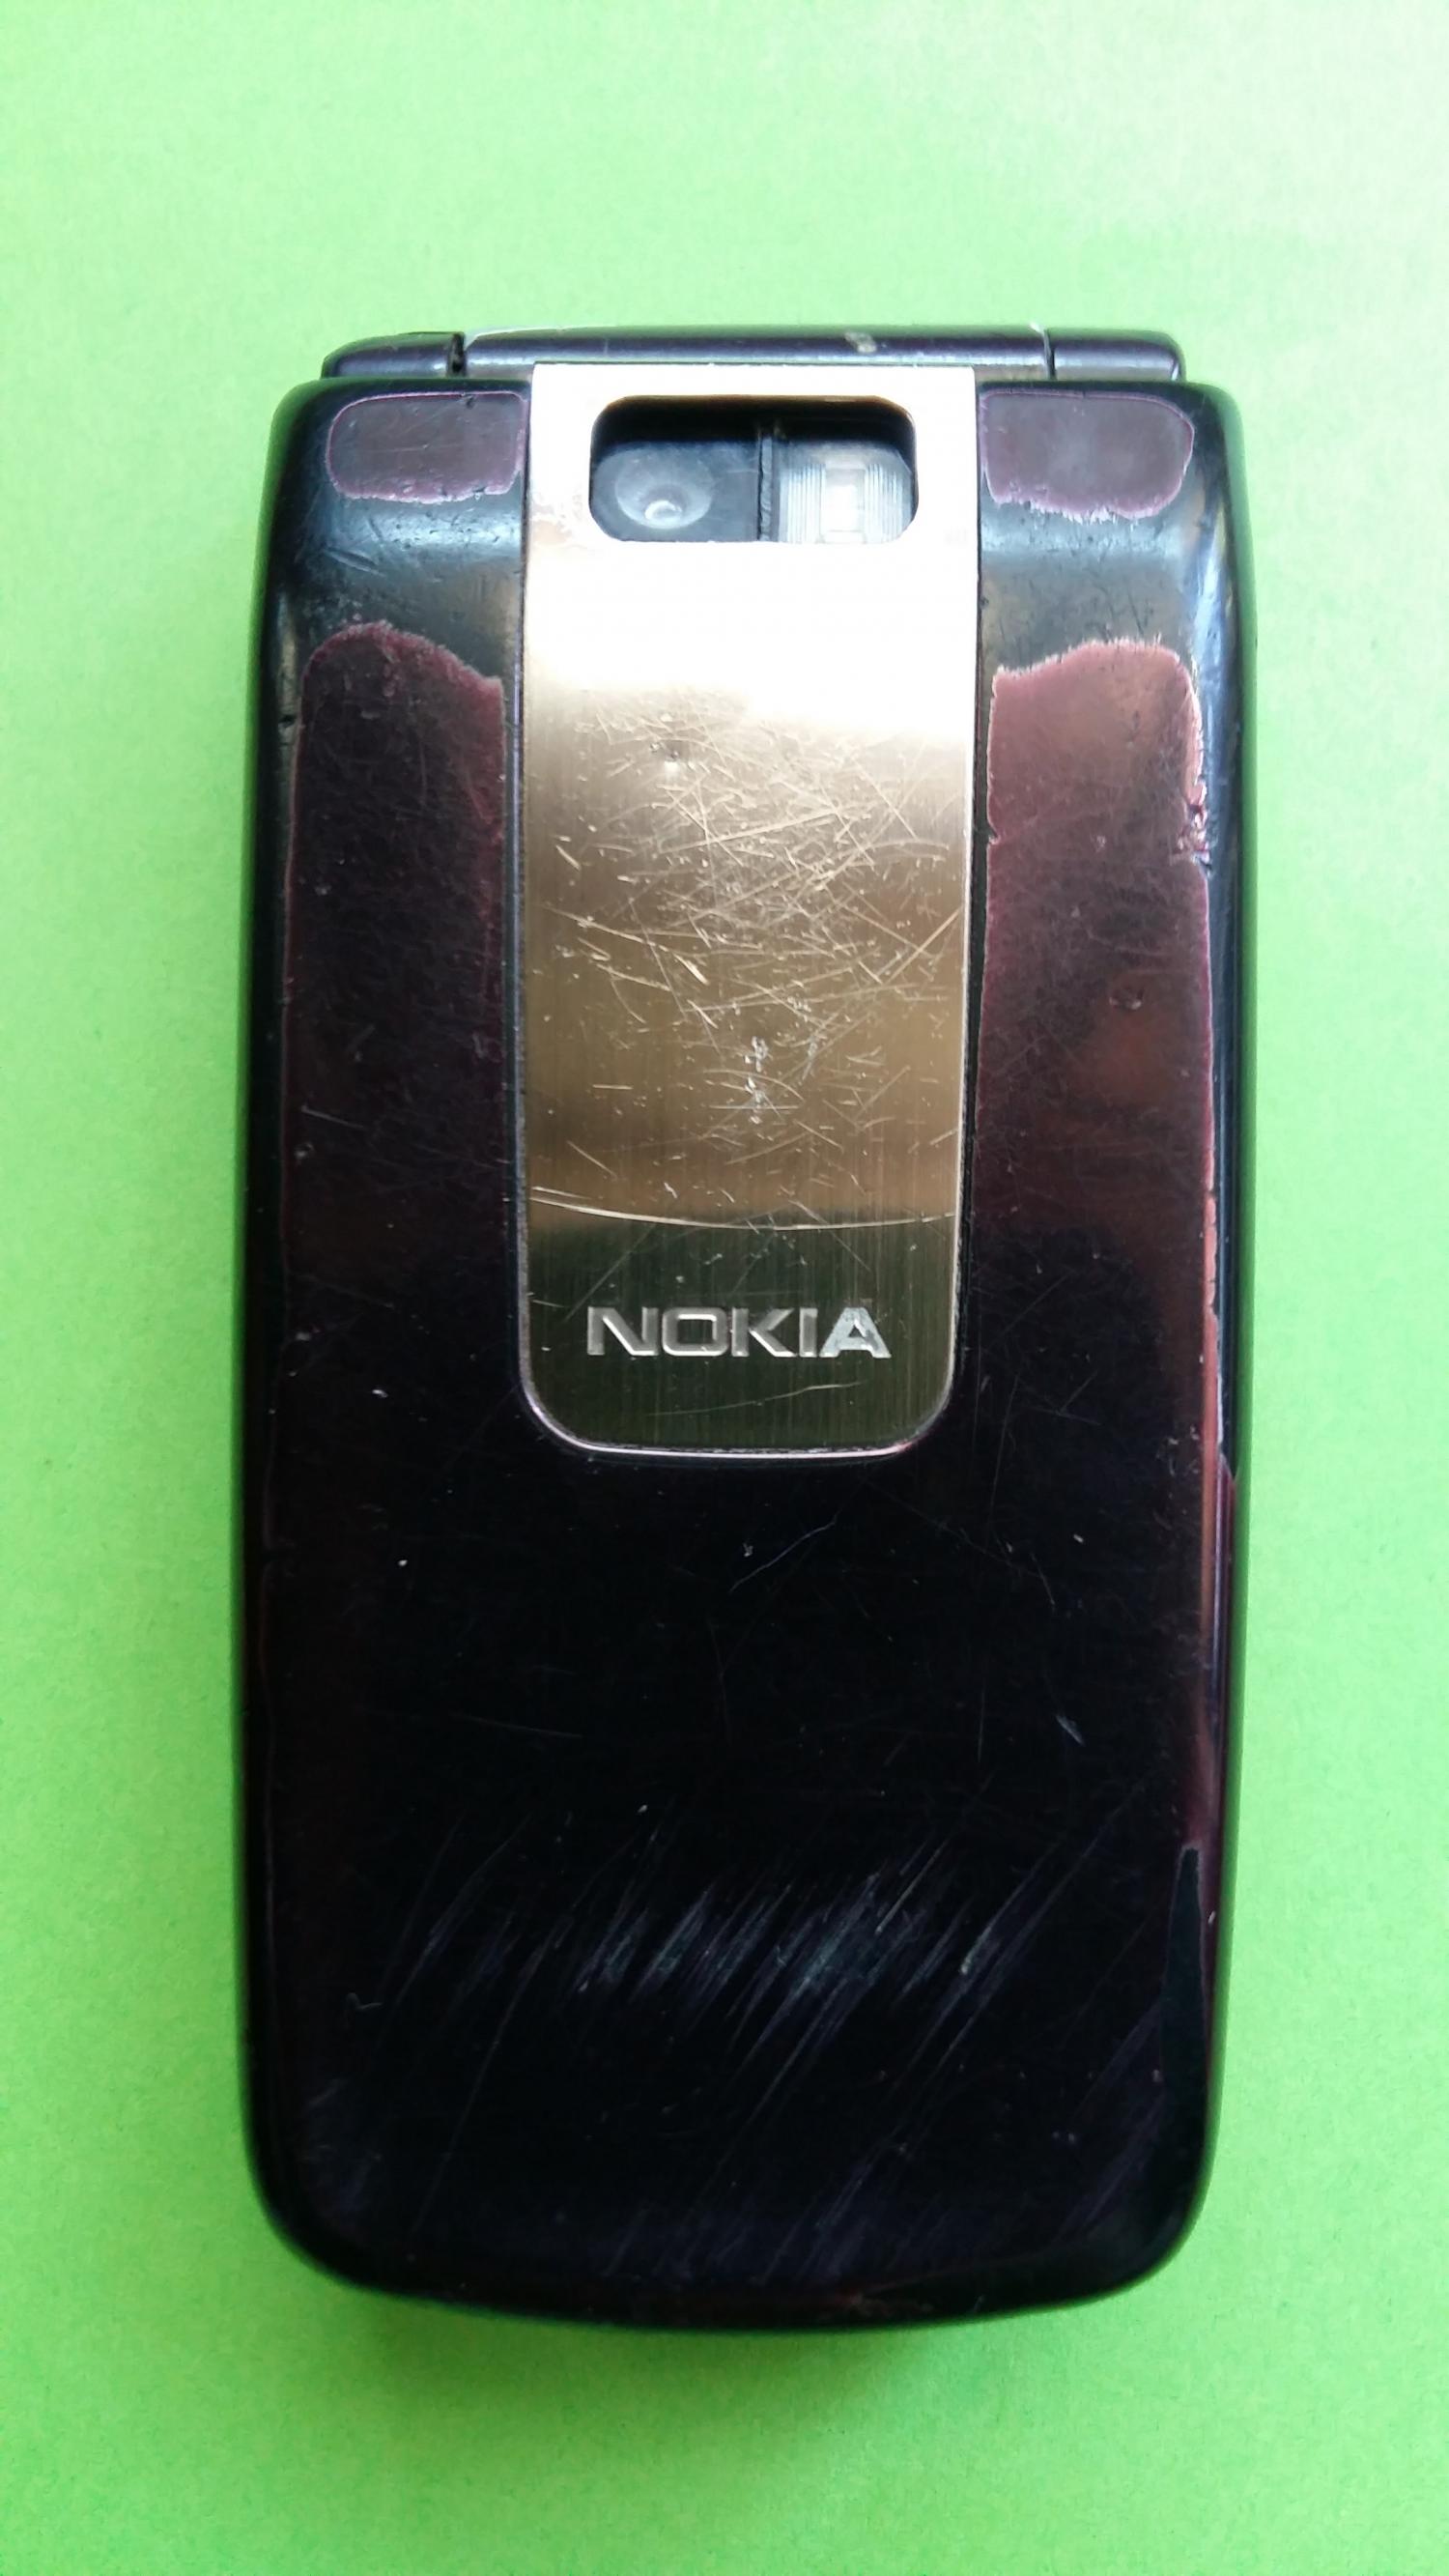 image-7331861-Nokia 6600F-1 Fold (1)5.jpg